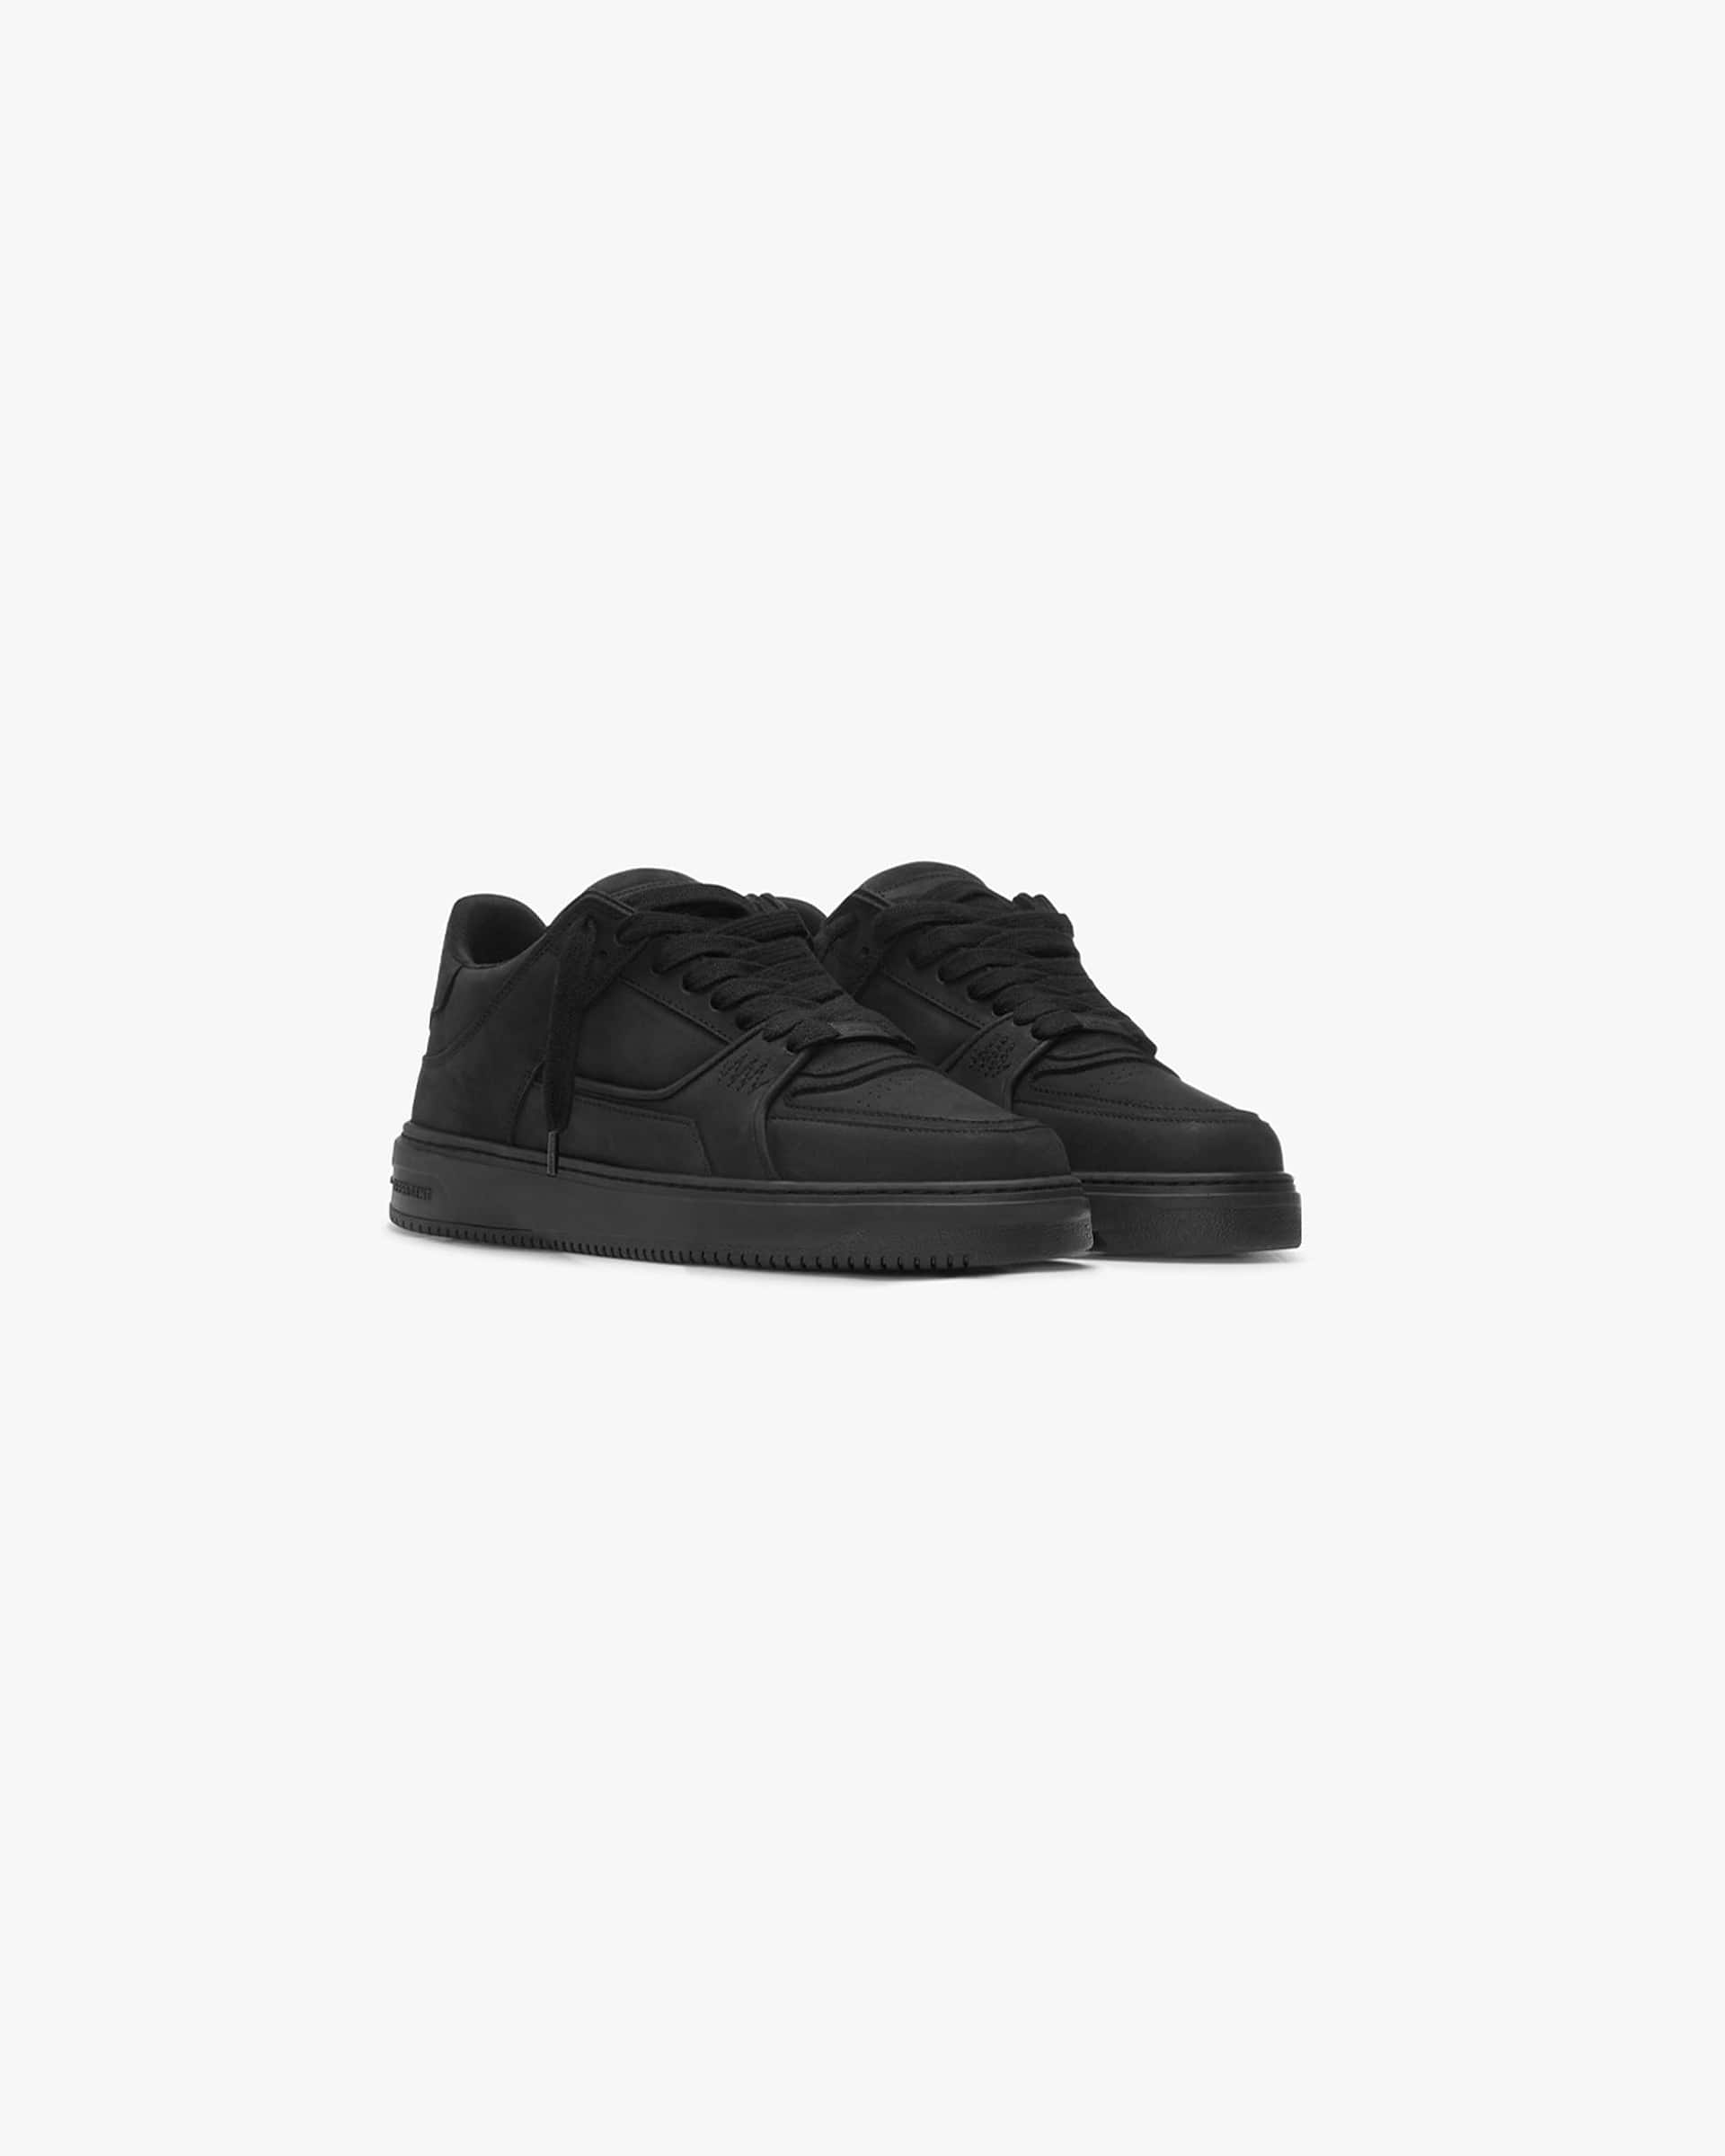 Apex | Black Footwear FW21 | Represent Clo